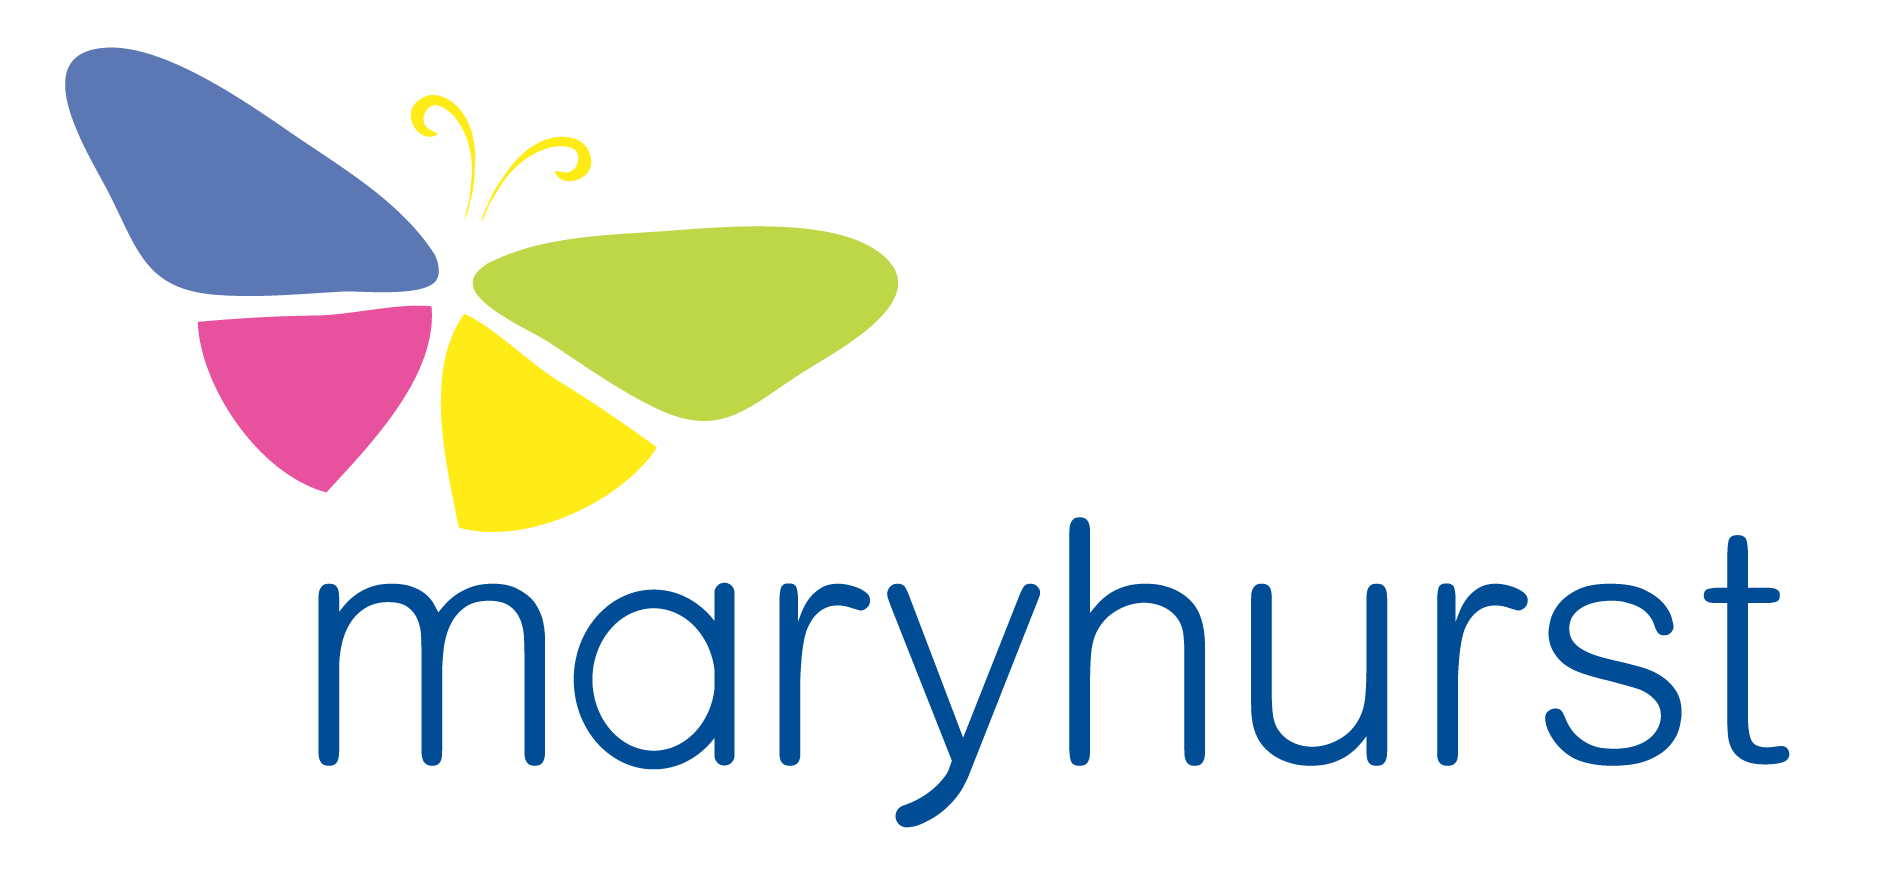 Maryhurst logo final cmyk-01.png